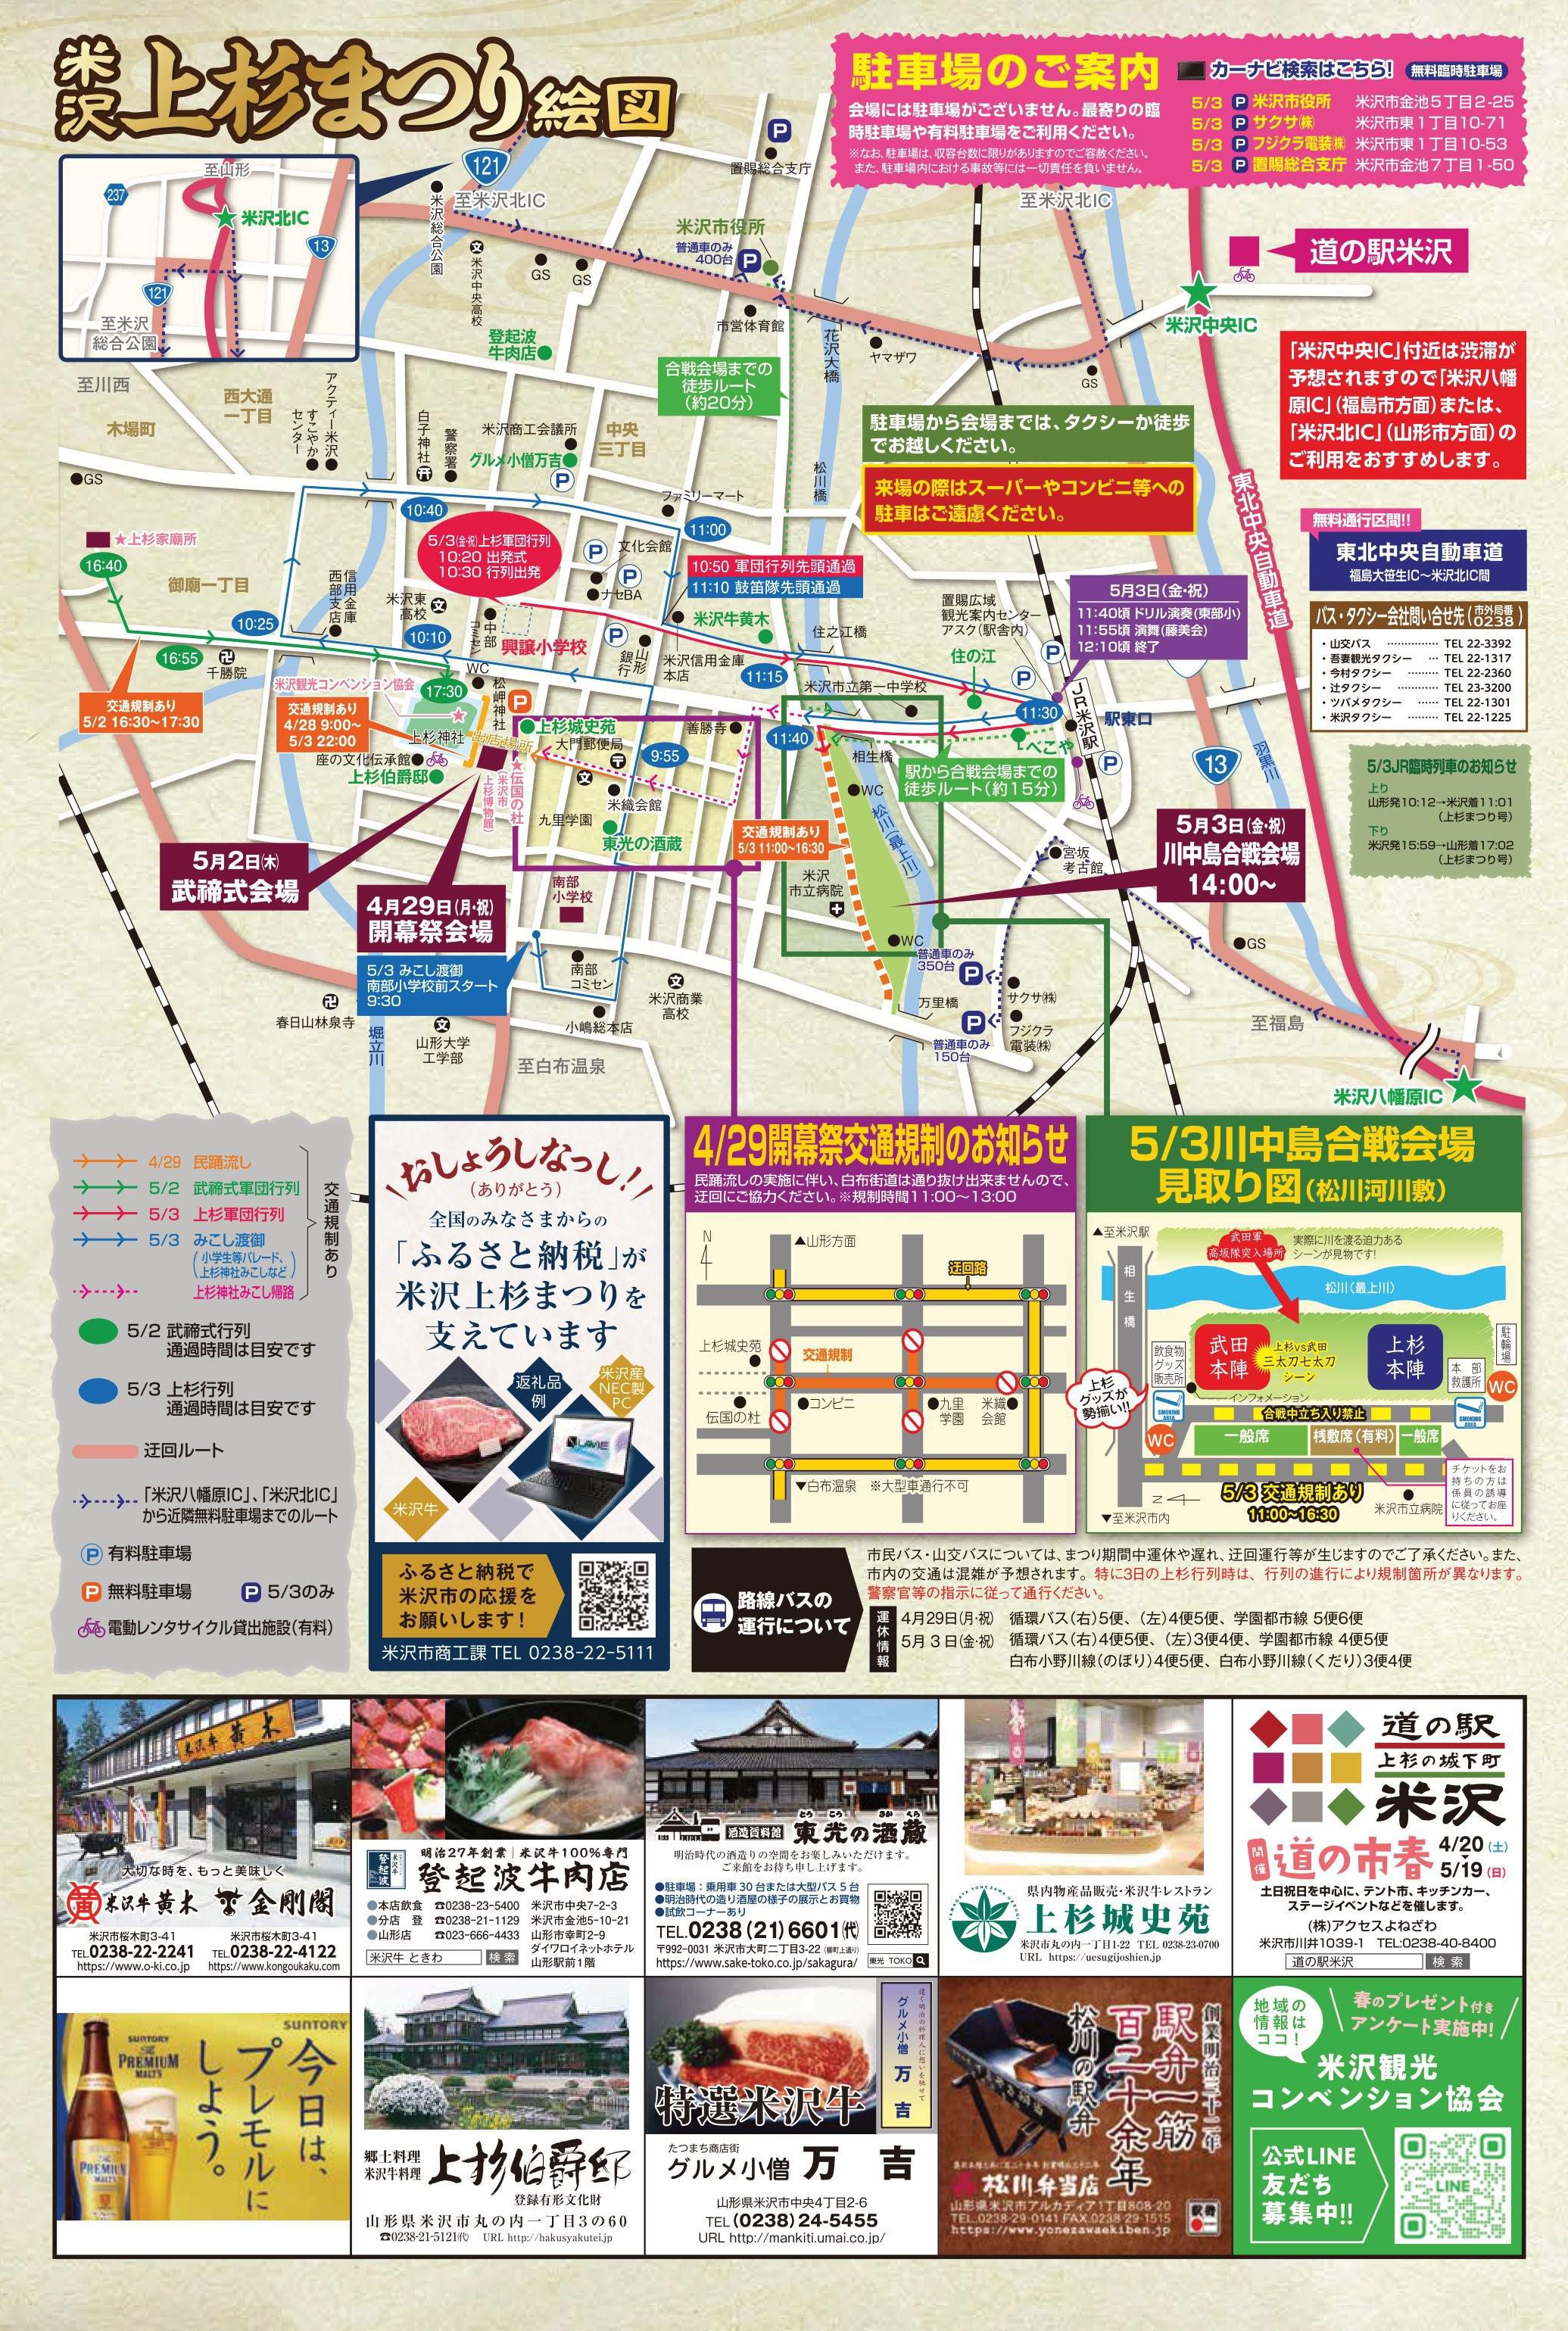 Yonezawa Uesugi Festival 2024 Flyer is out!